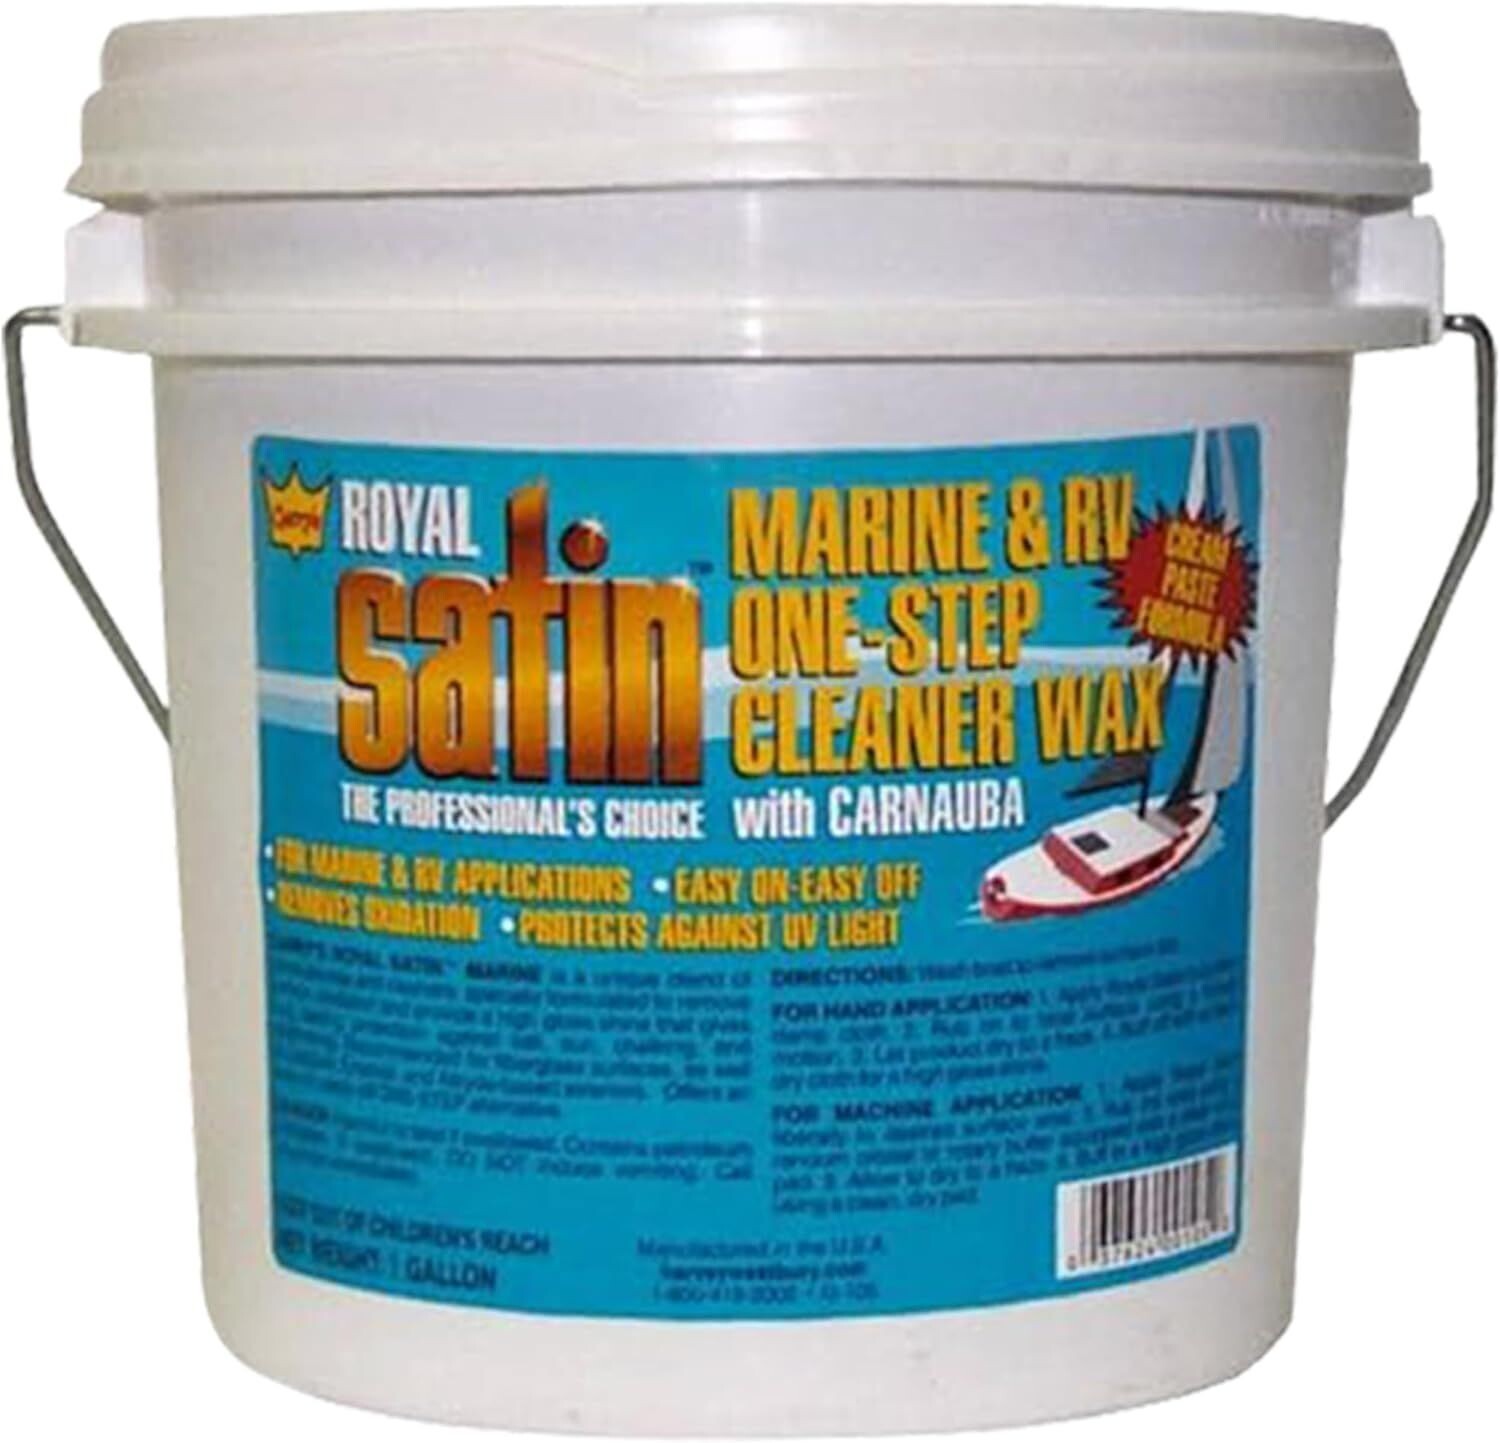 Garry's Royal Satin Marine & RV ONE STEP Cleaner Wax (1 Gallon)